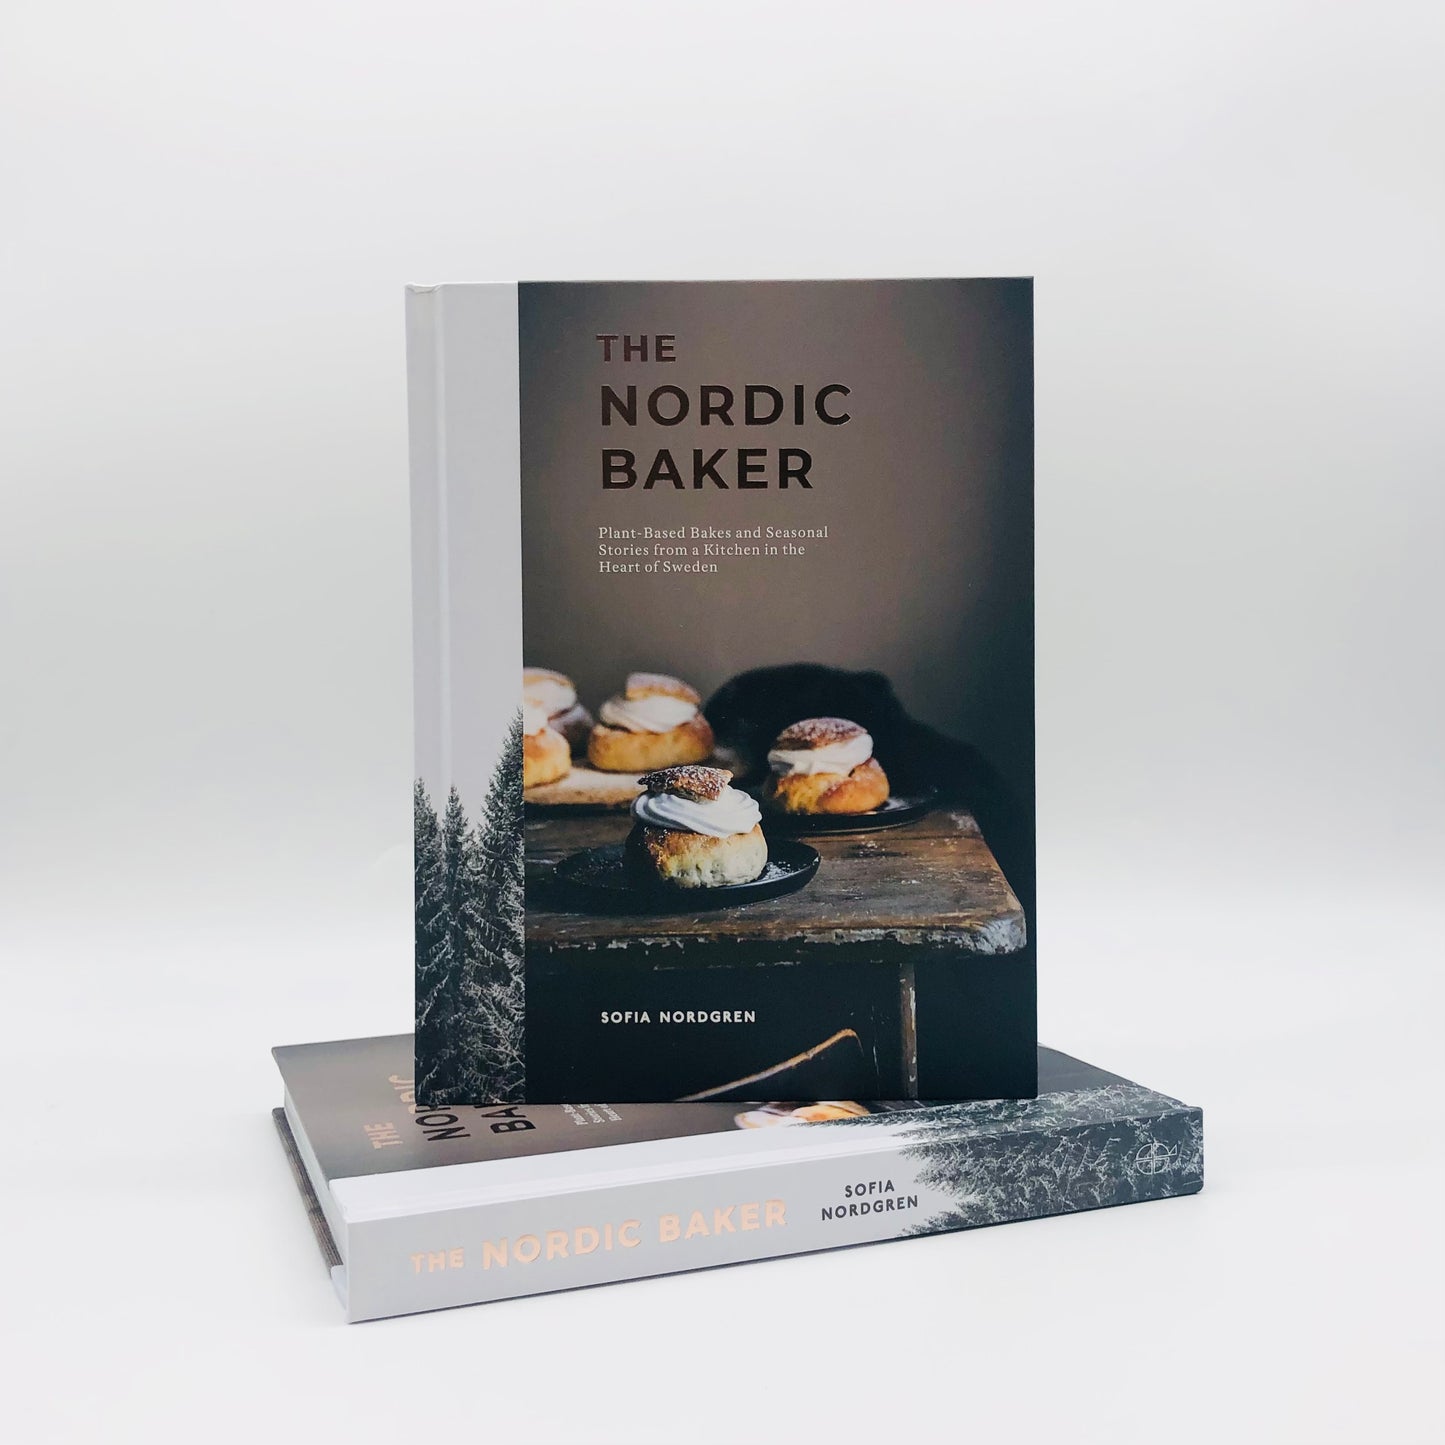 The Nordic Baker: Plant Based Bakes